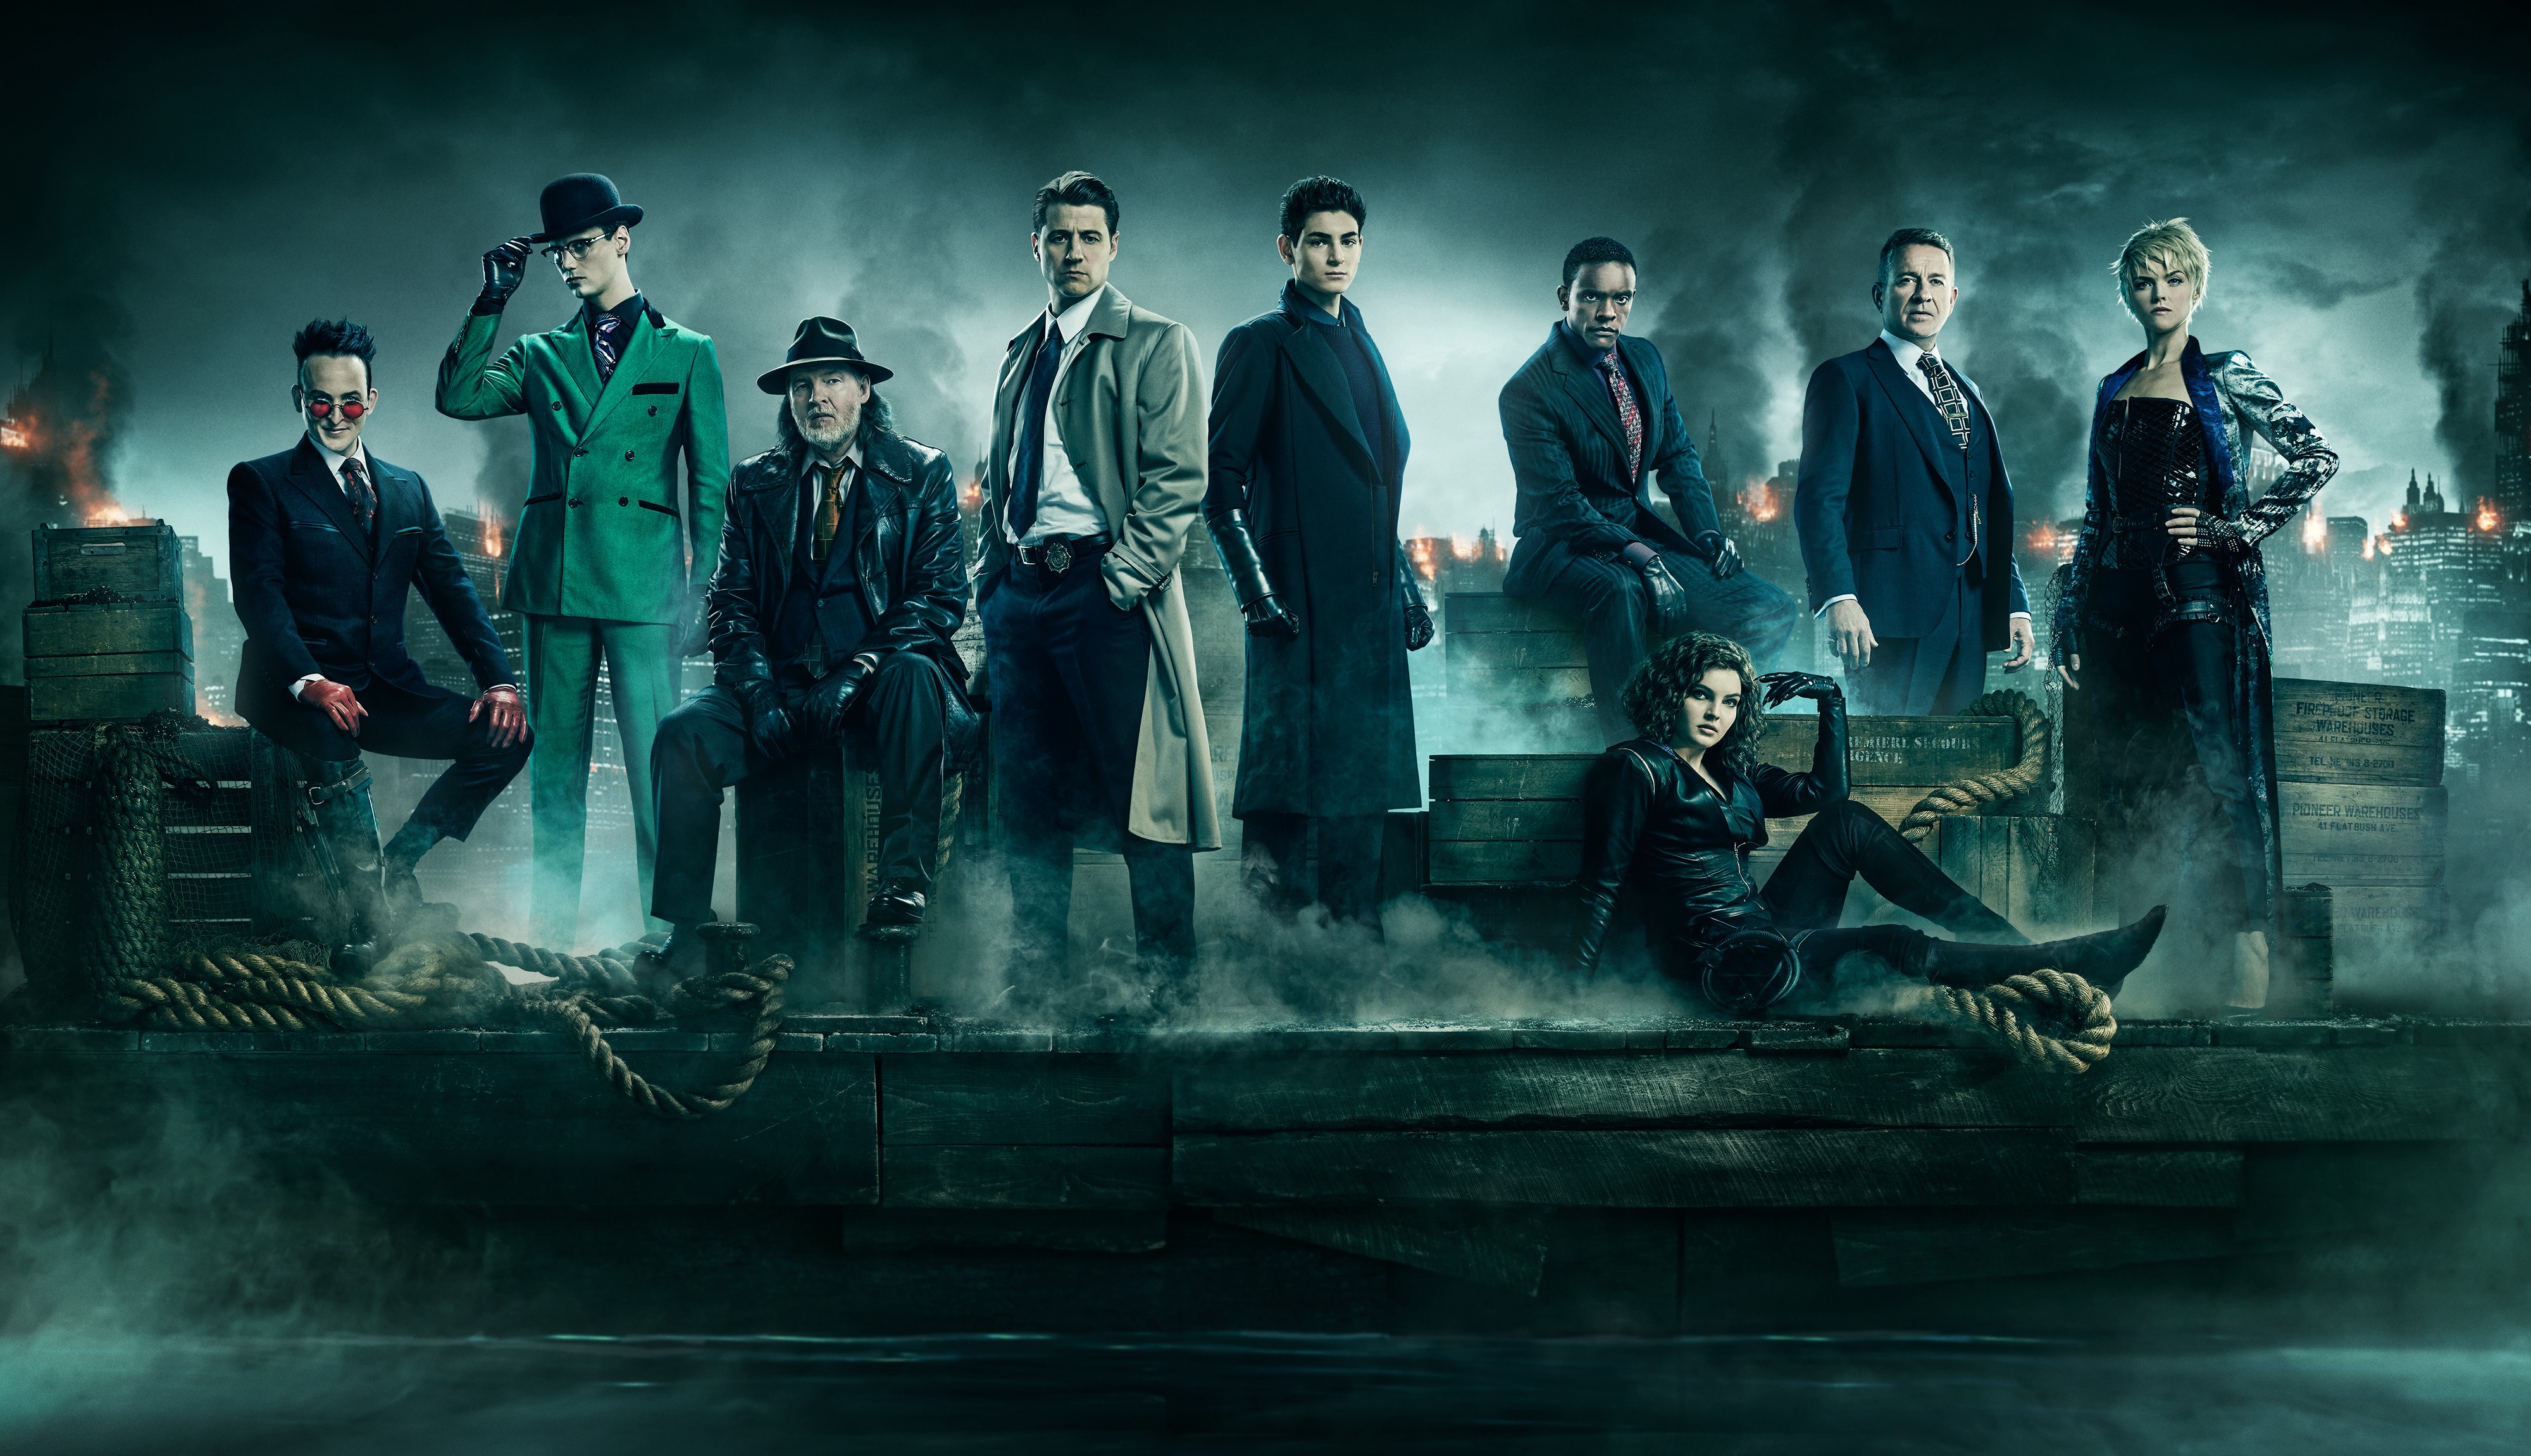 Gotham Season 4 Wallpapers